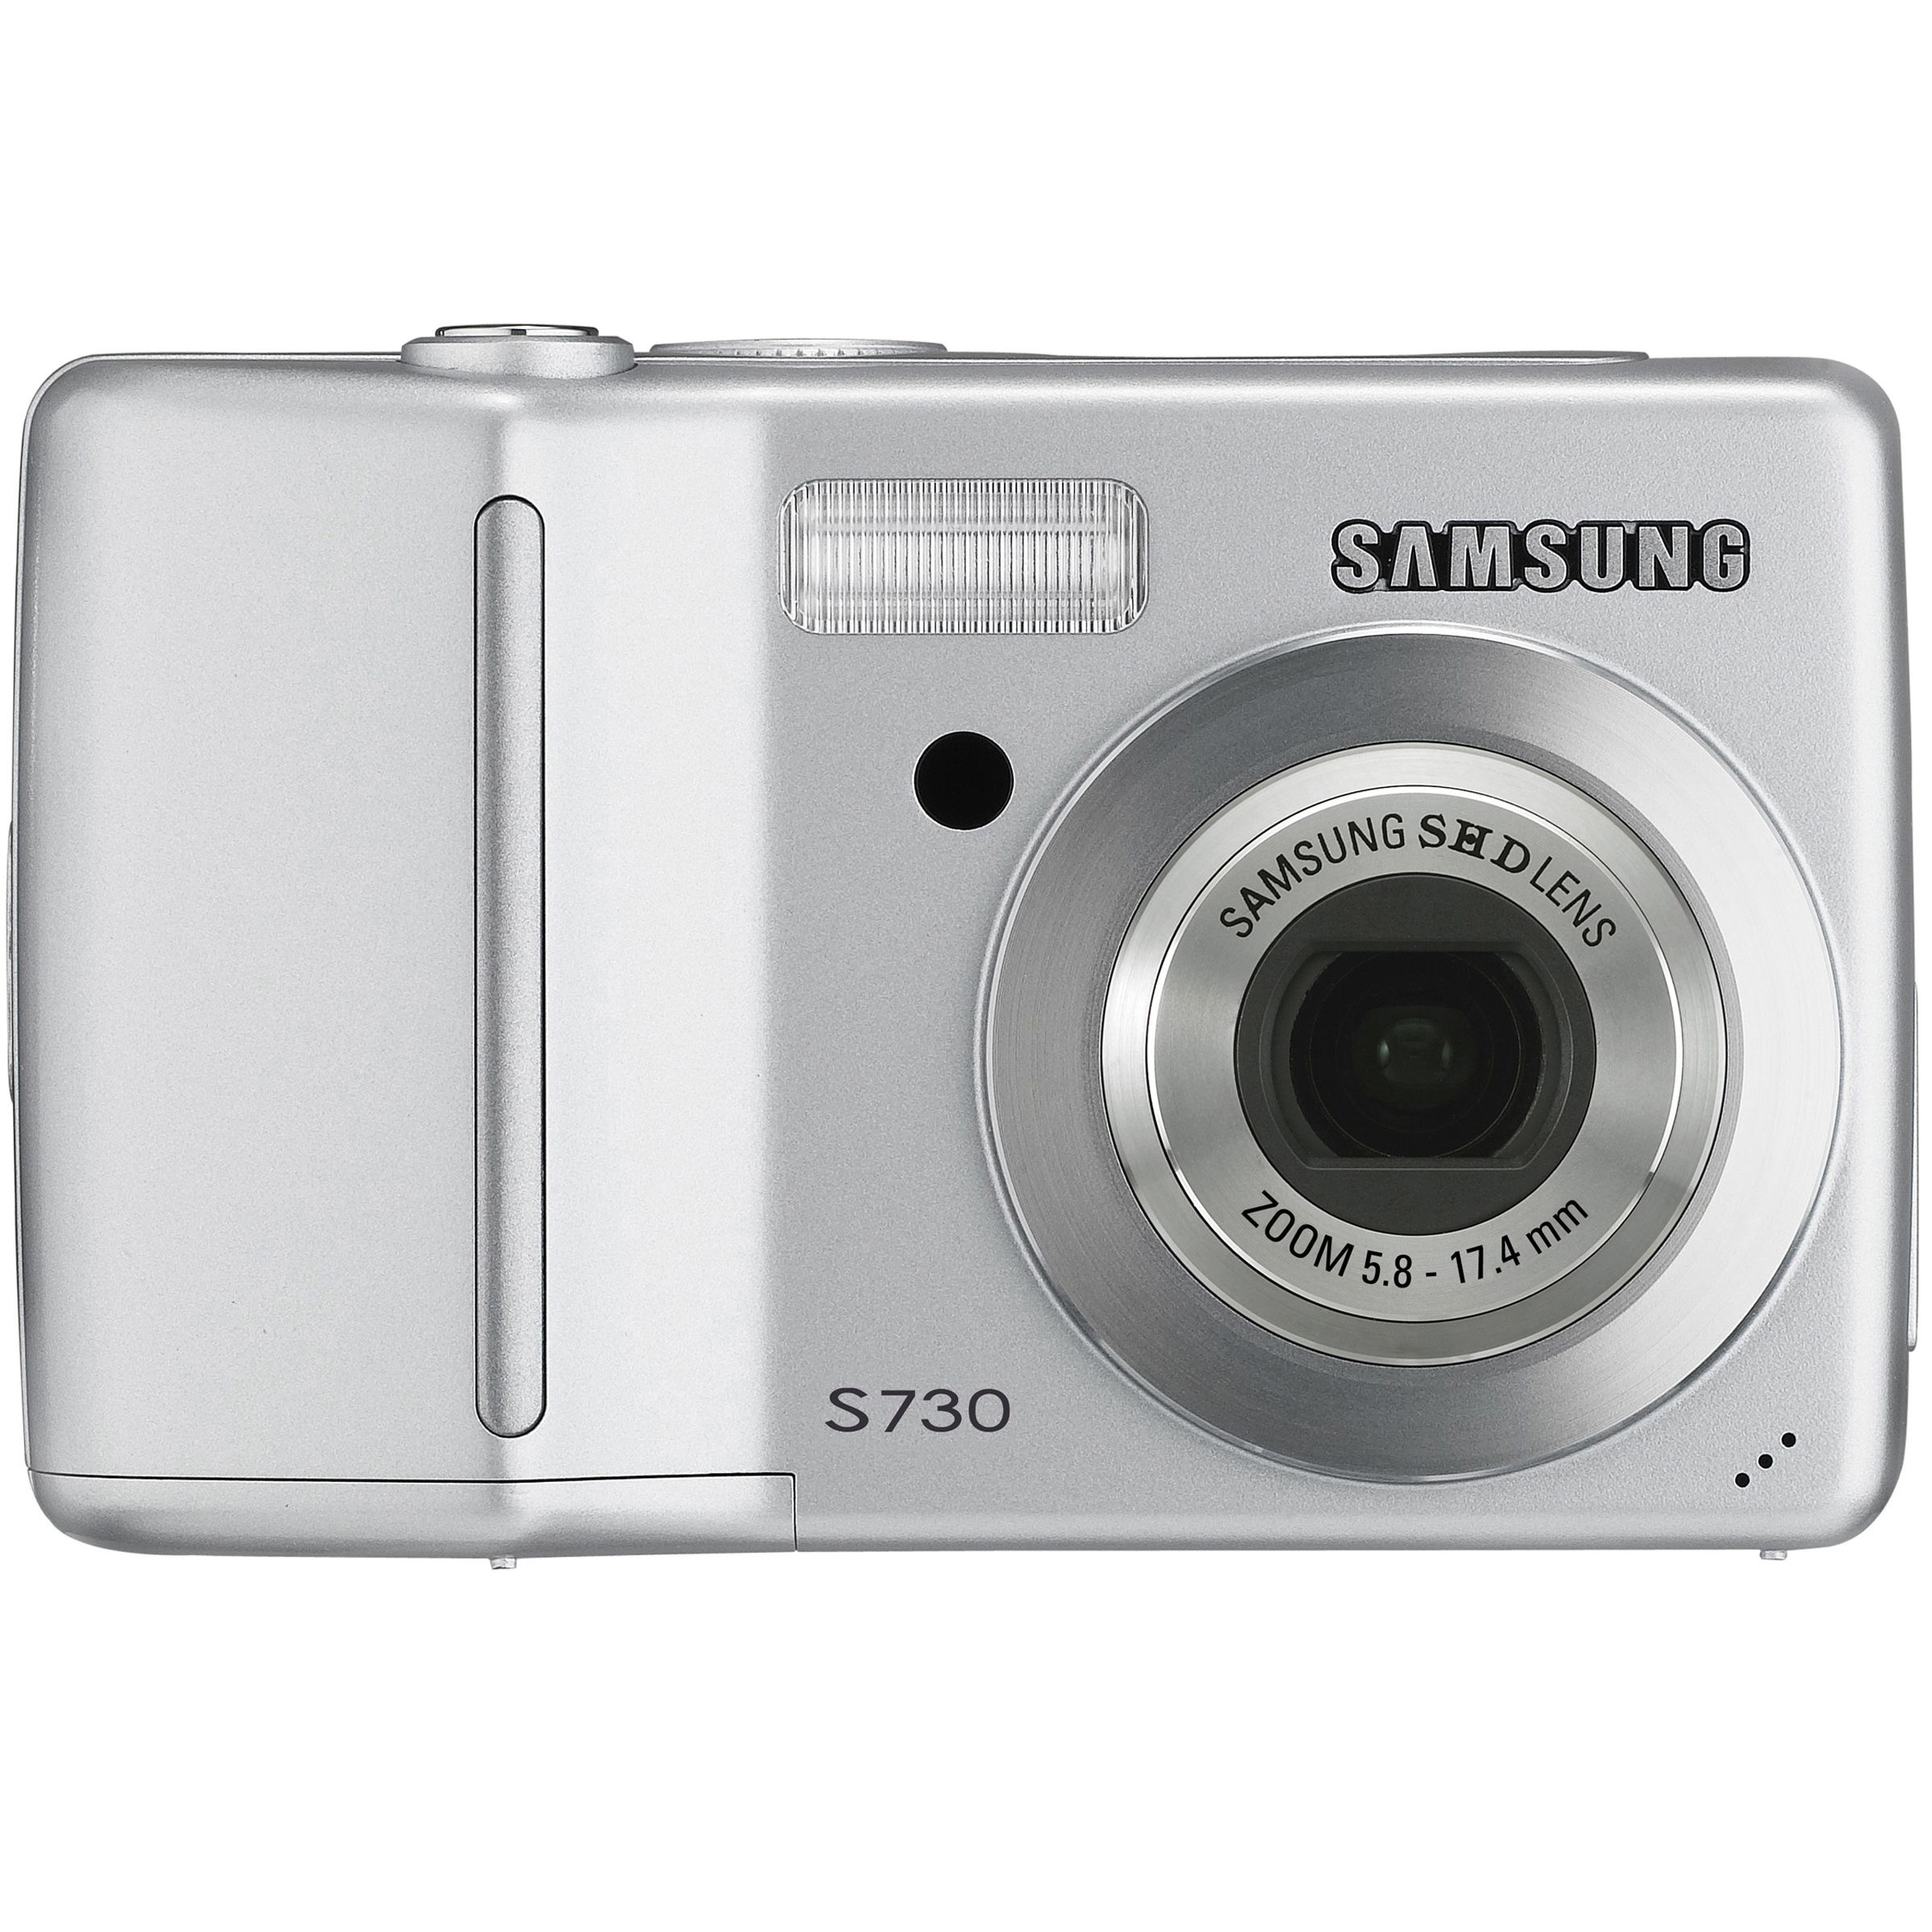 7.2MP Digital Camera with 3x Optical Zoom/5x Digital Zoom - Silver